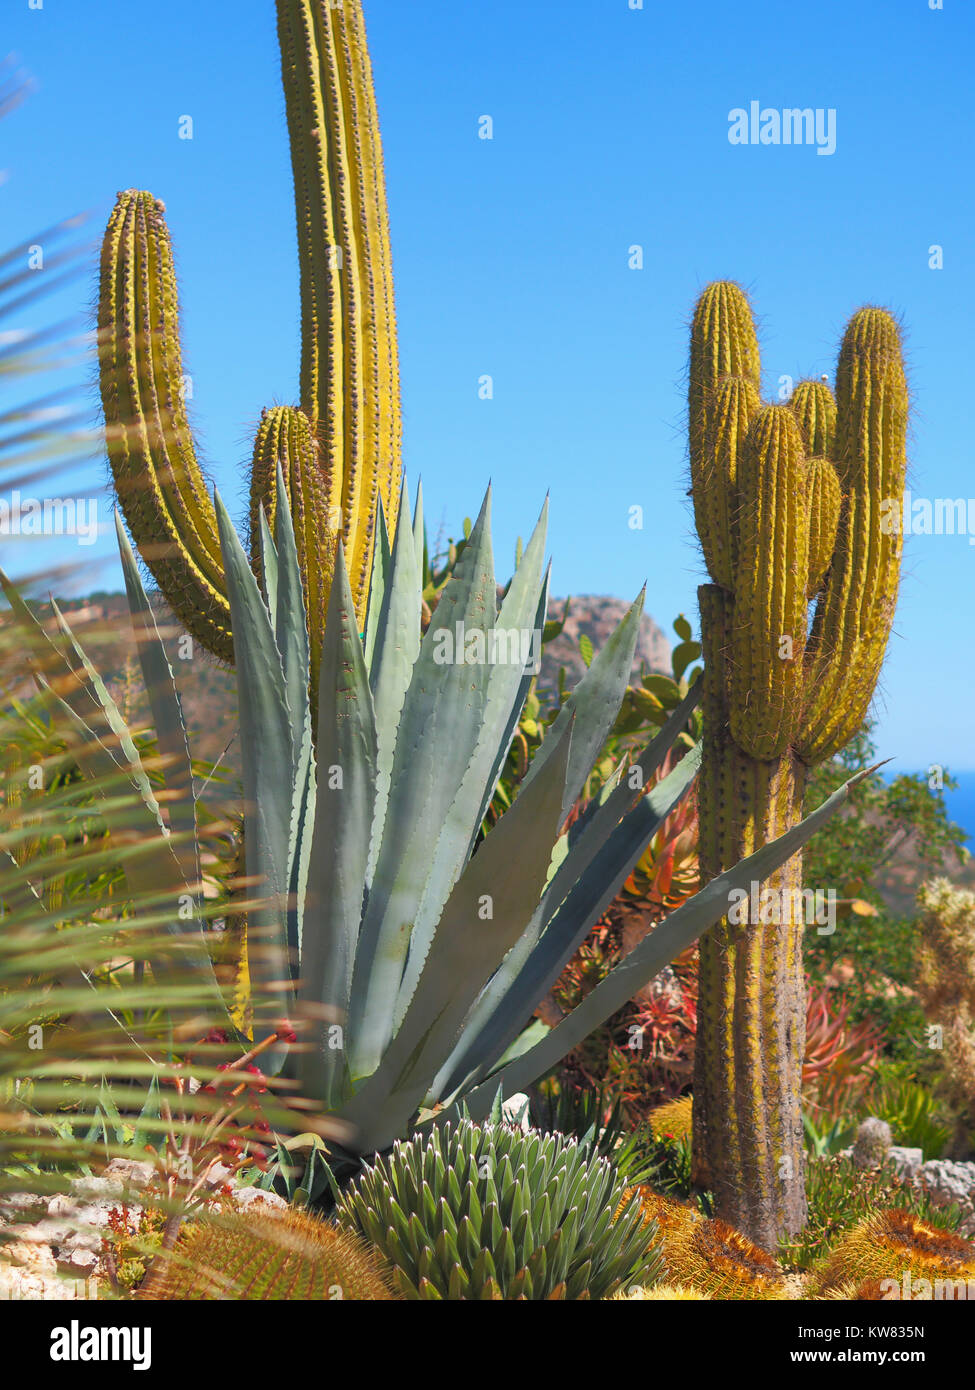 Le Jardin exotique d'Eze / Cactus Garden - Nice, France Stock Photo - Alamy